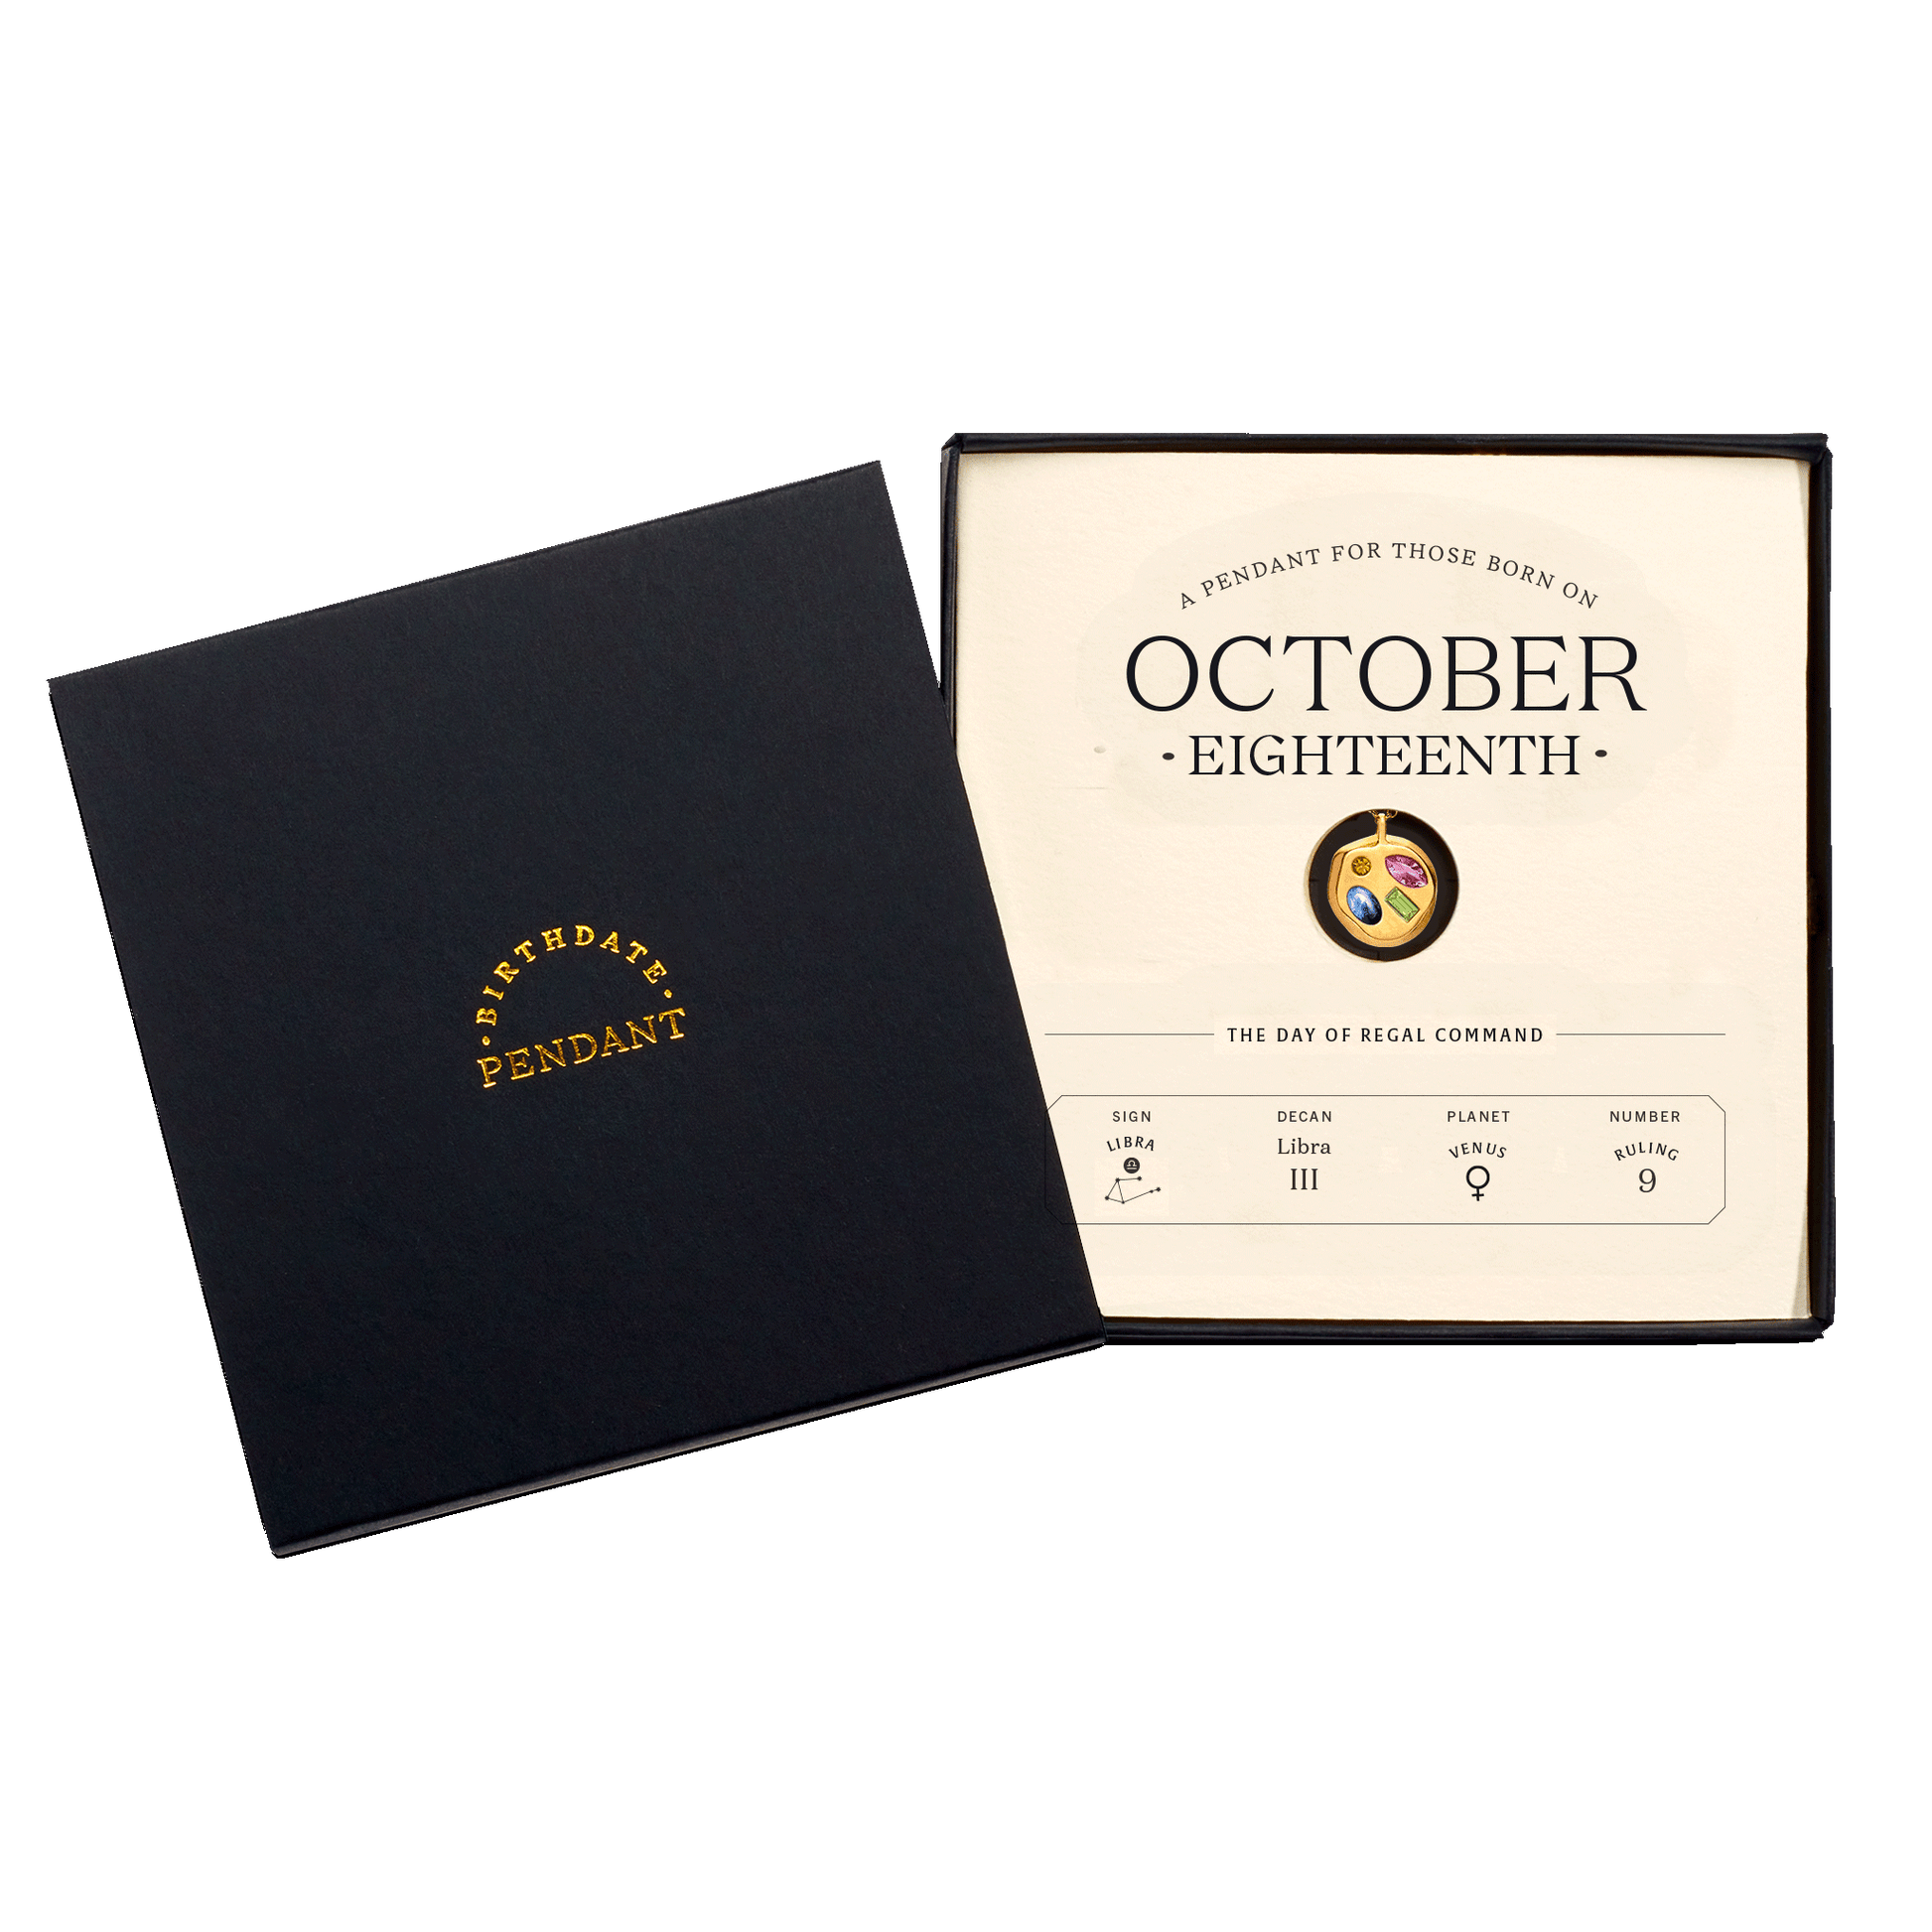 The October Eighteenth Pendant inside its box